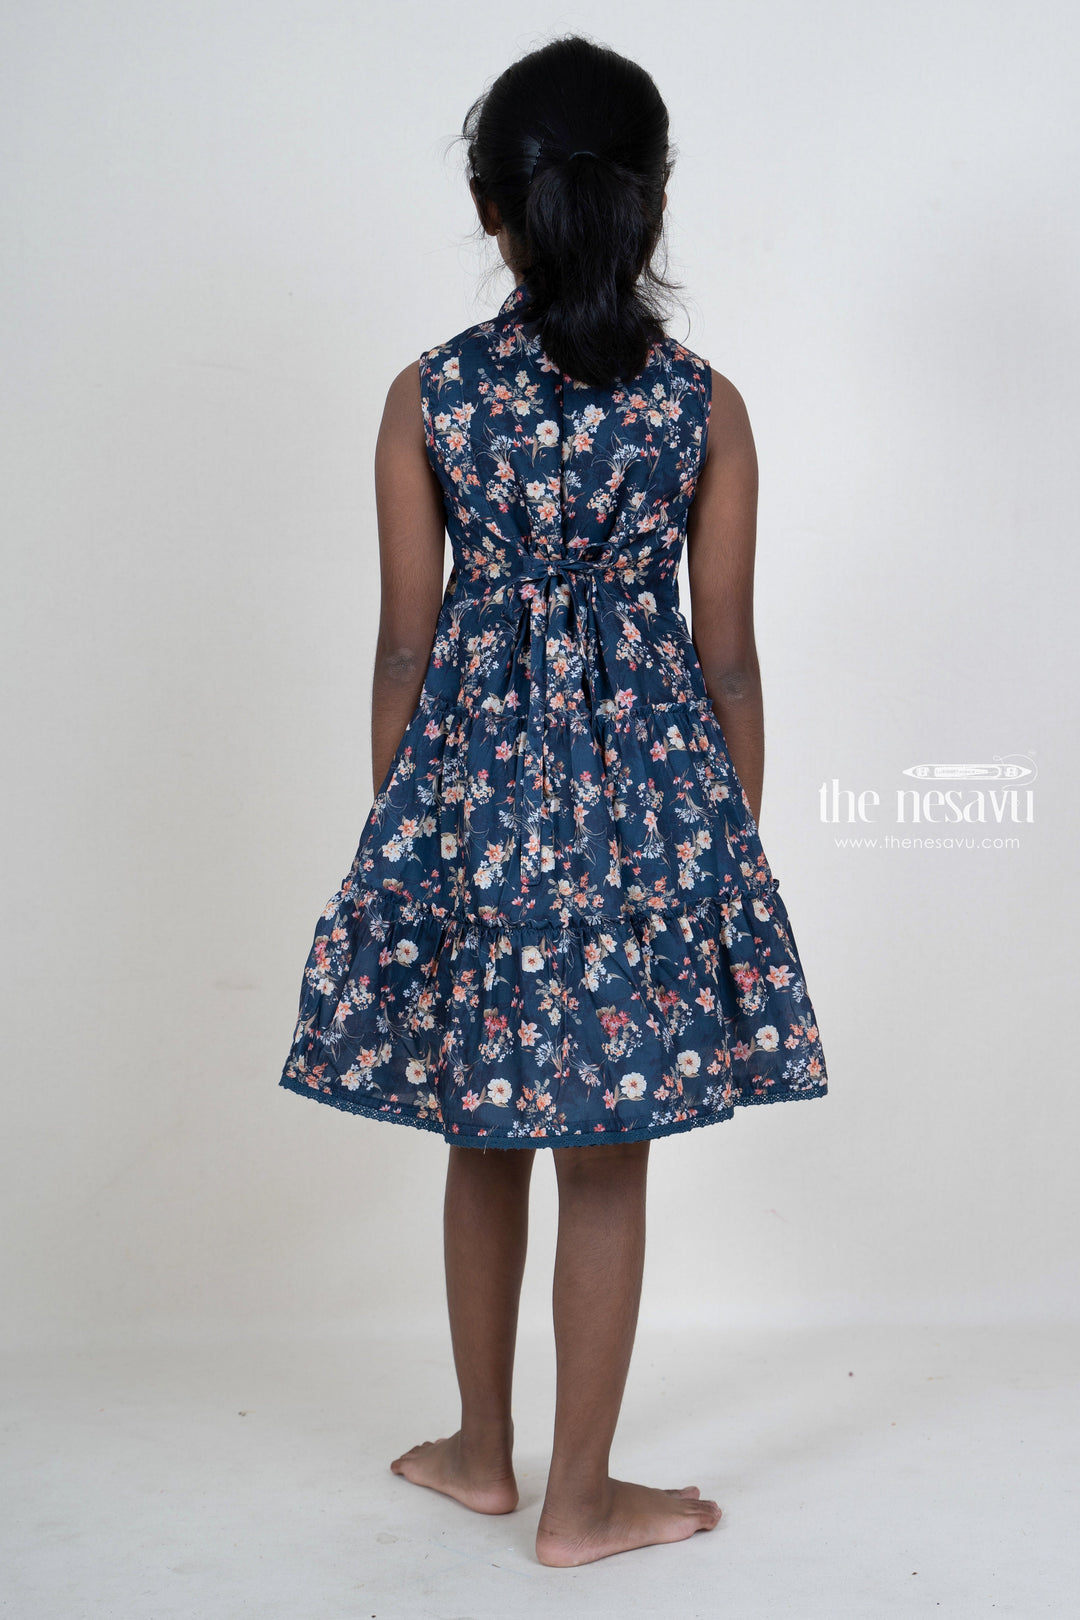 The Nesavu Frocks & Dresses Midnight Blue Floral Designer Collared Frock With Neck Tie For Girls psr silks Nesavu